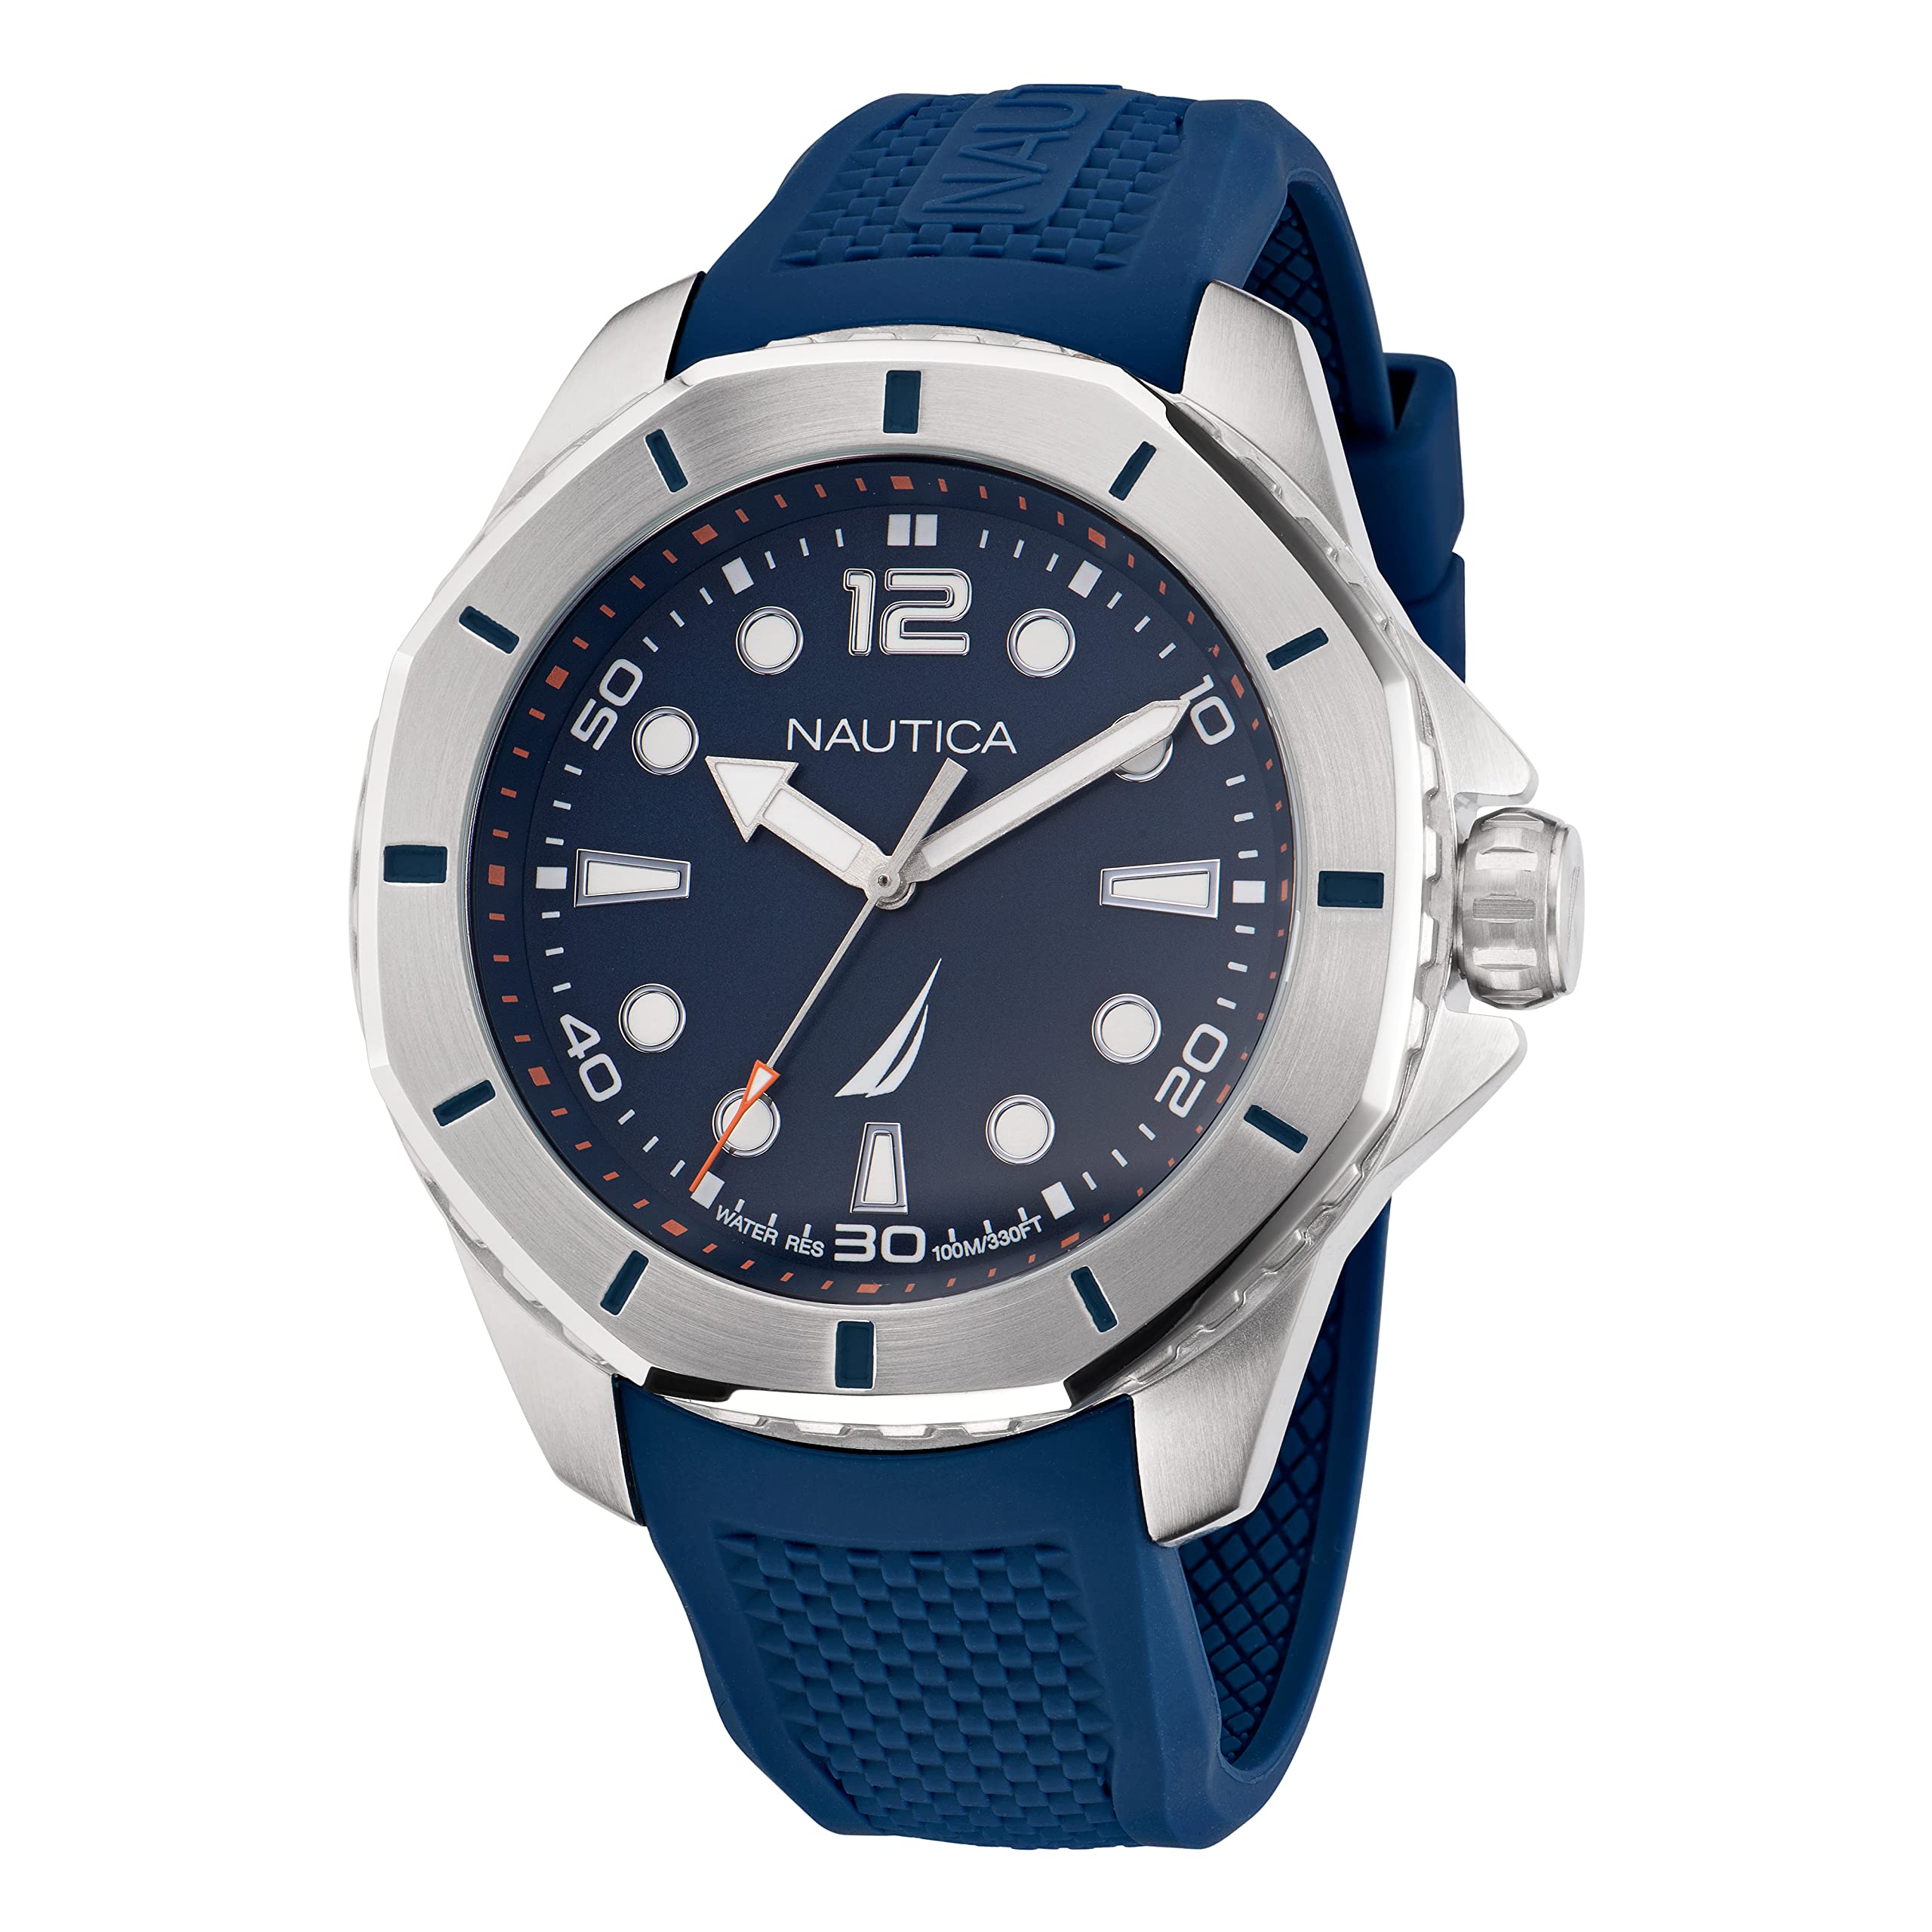 Nautica Men's KOH May Bay Blue Silicone Strap Watch (Model: NAPKMF201)